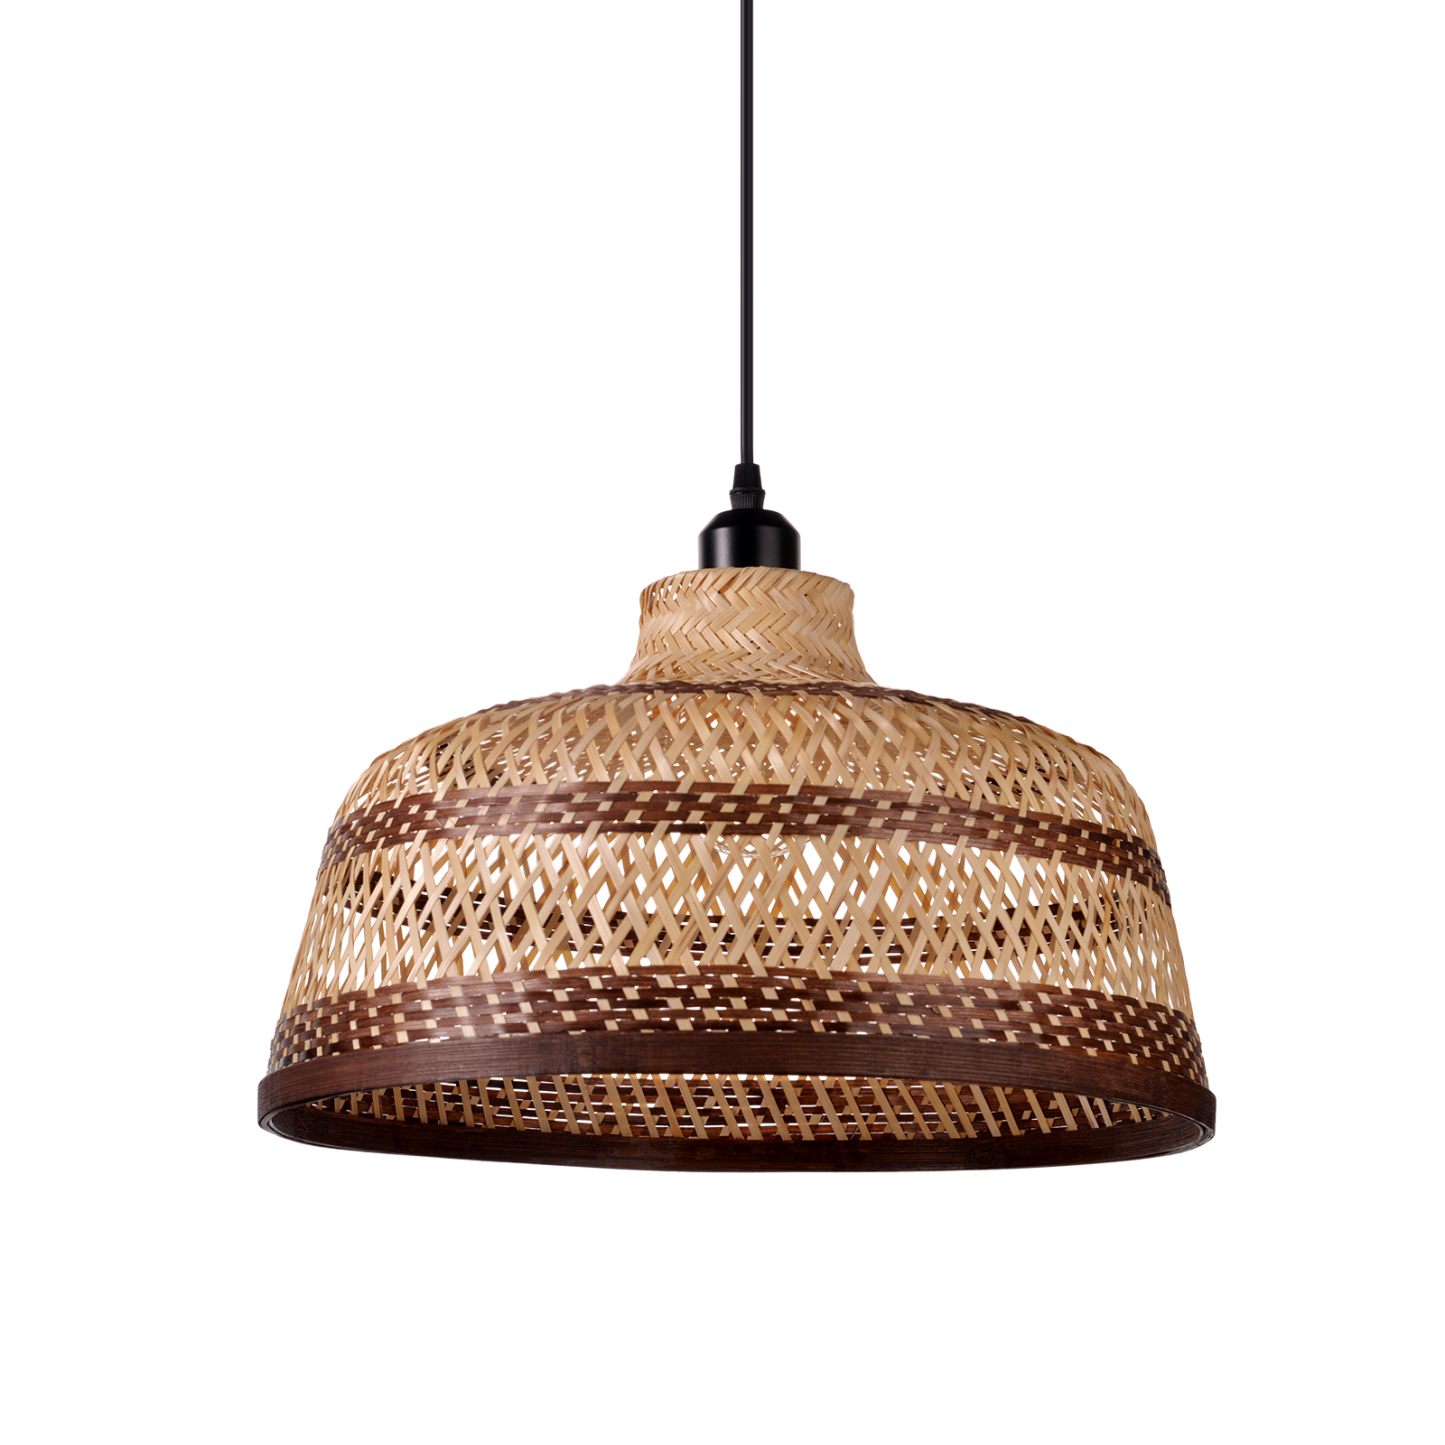 Basket shaped brown striped bamboo pendant light